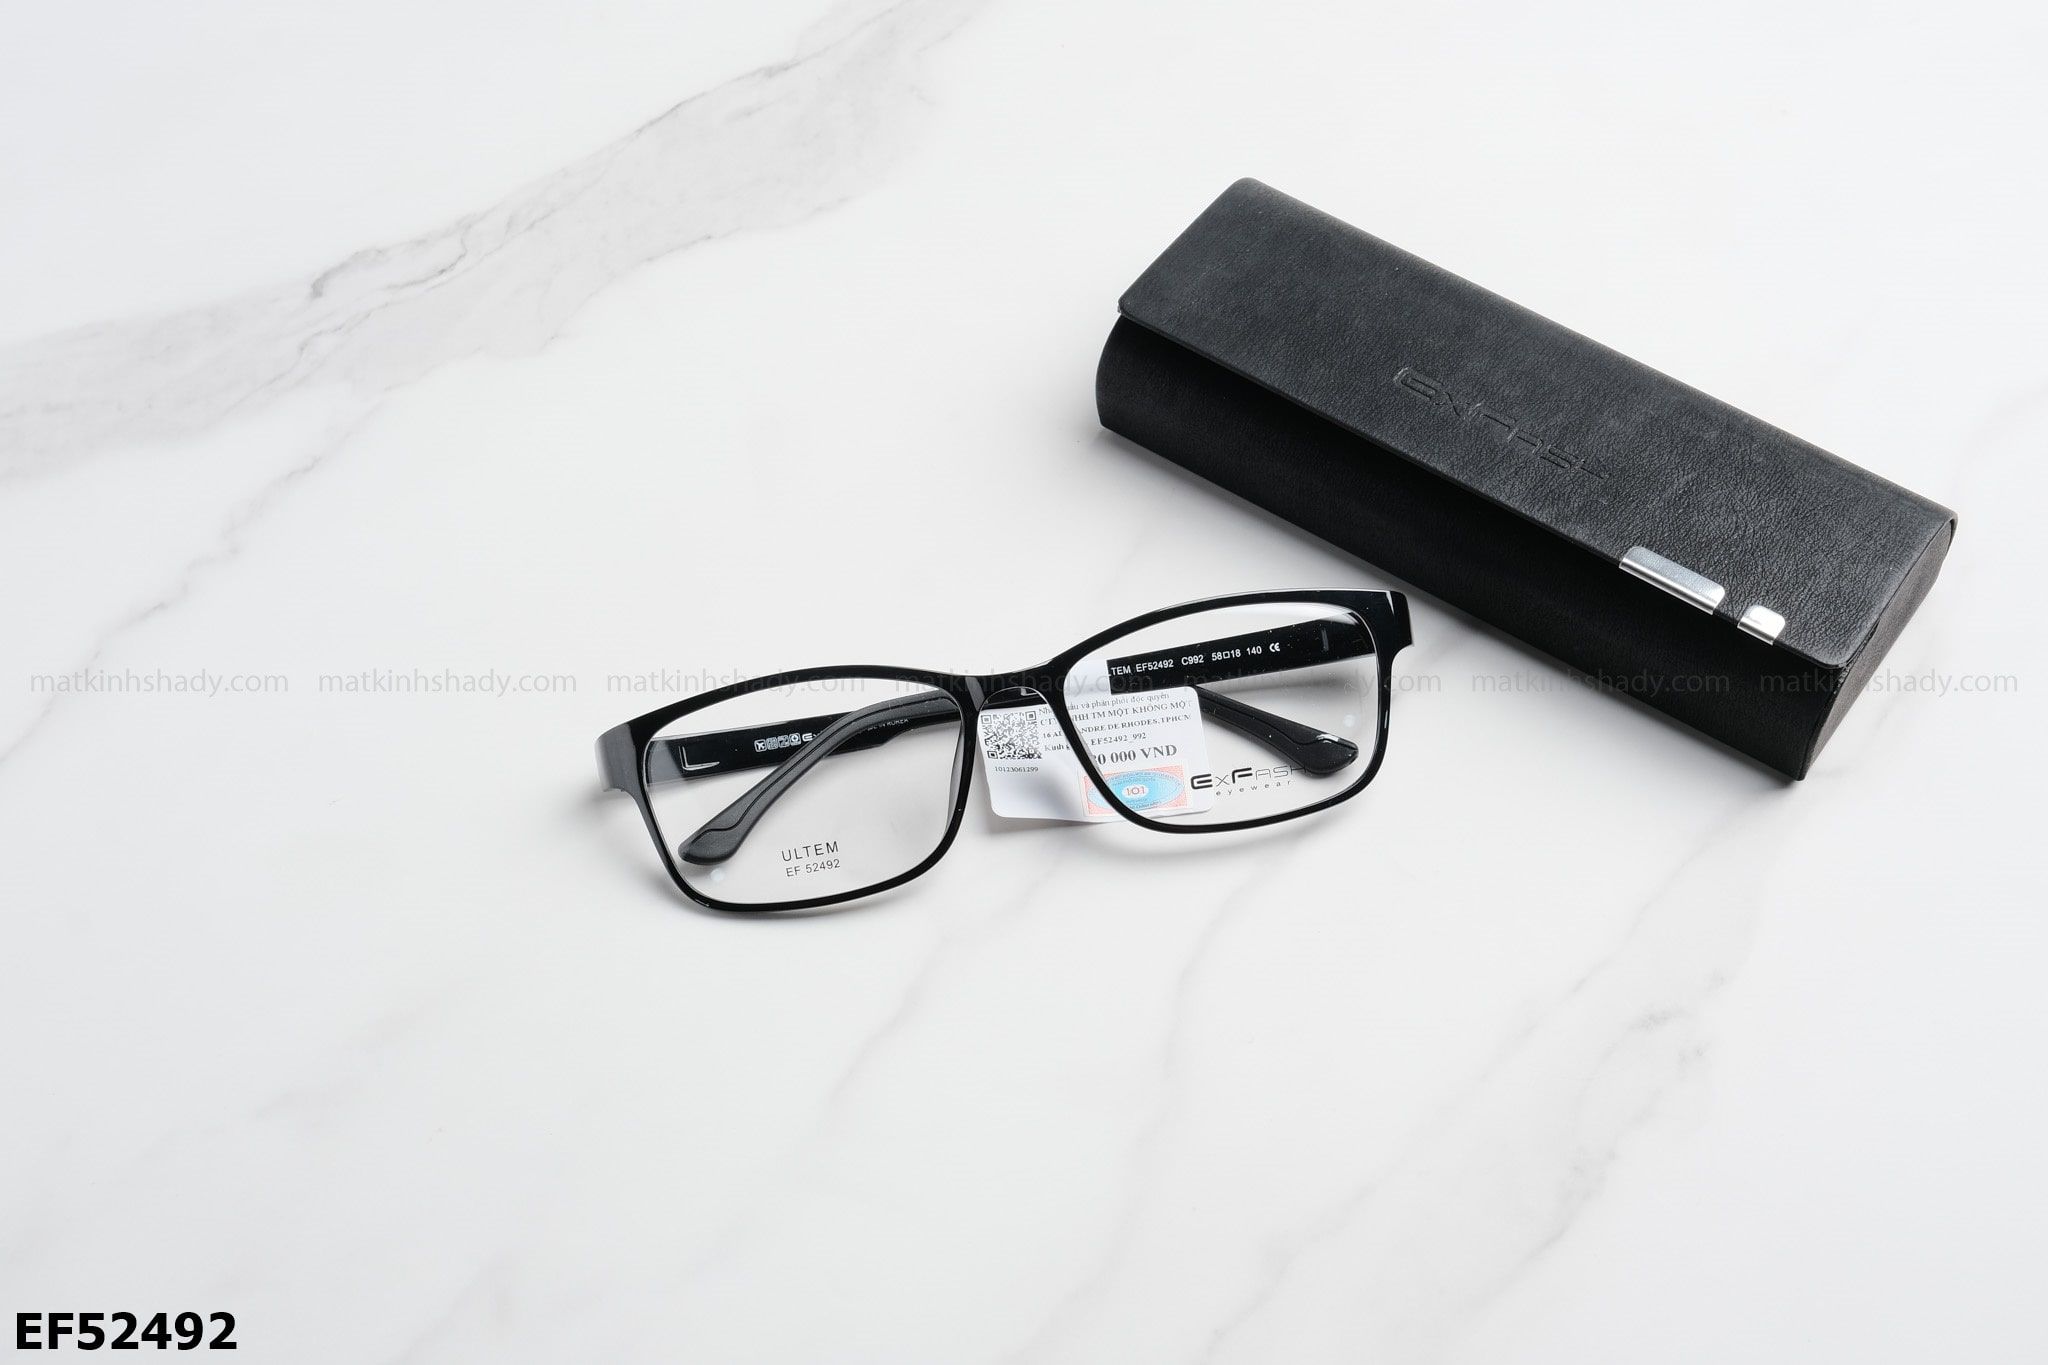  Exfash Eyewear - Glasses - EF52492 